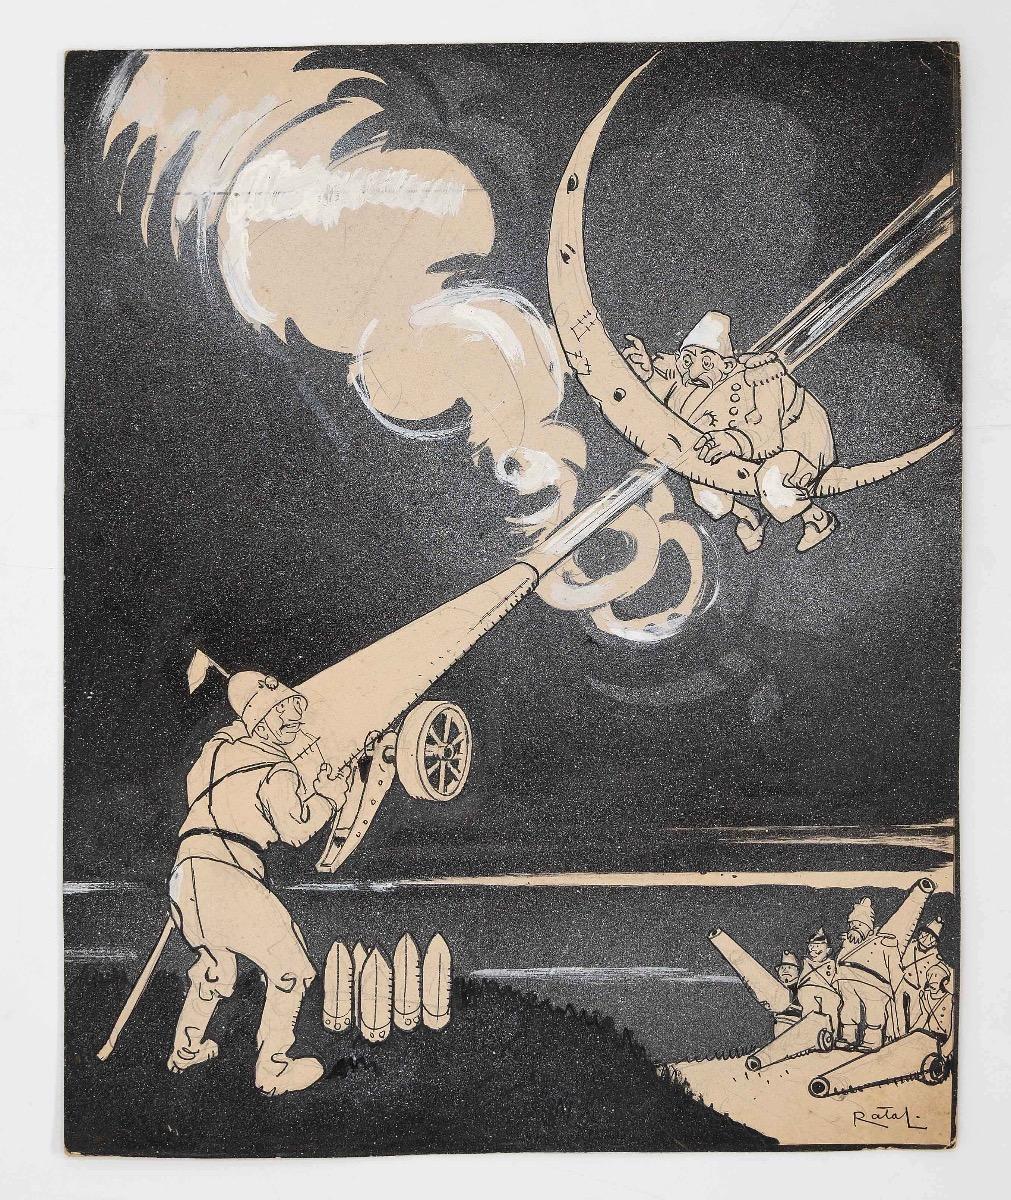 Gabriele Galantara Figurative Art - Shoot Missiles - Original Ink/ Watercolor by G. Galantara - 1910s